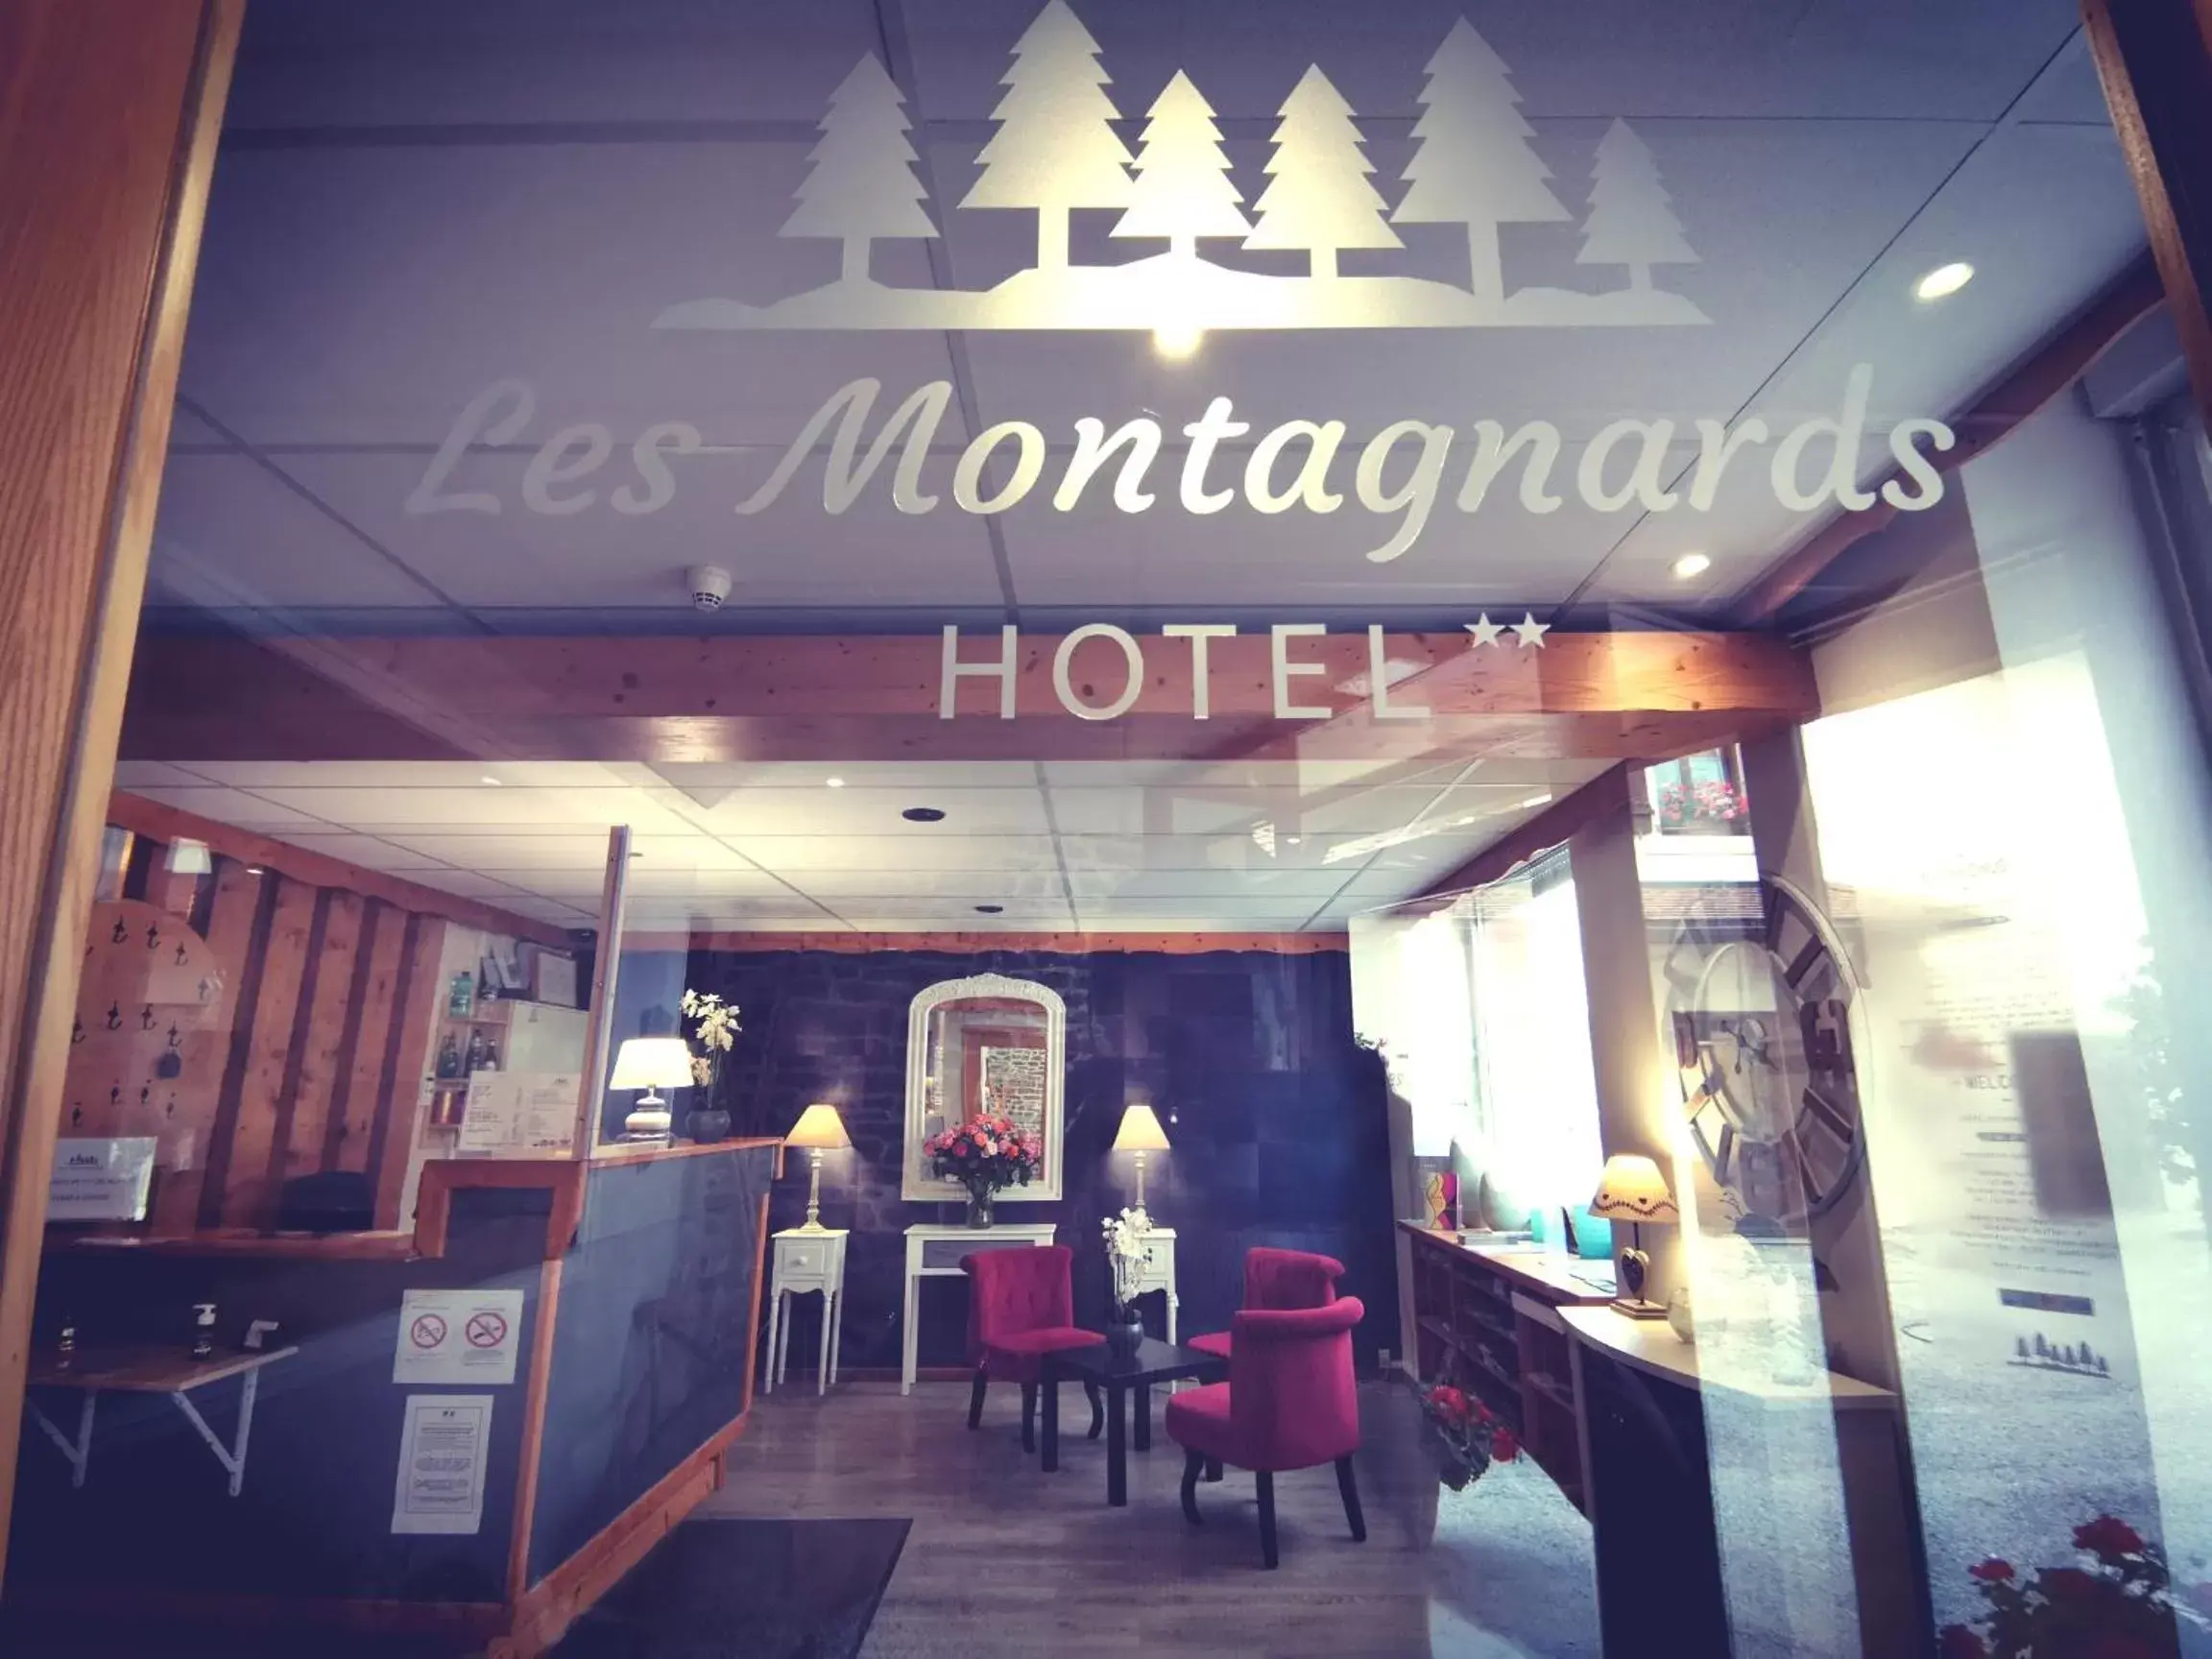 Decorative detail in Hotel Les Montagnards